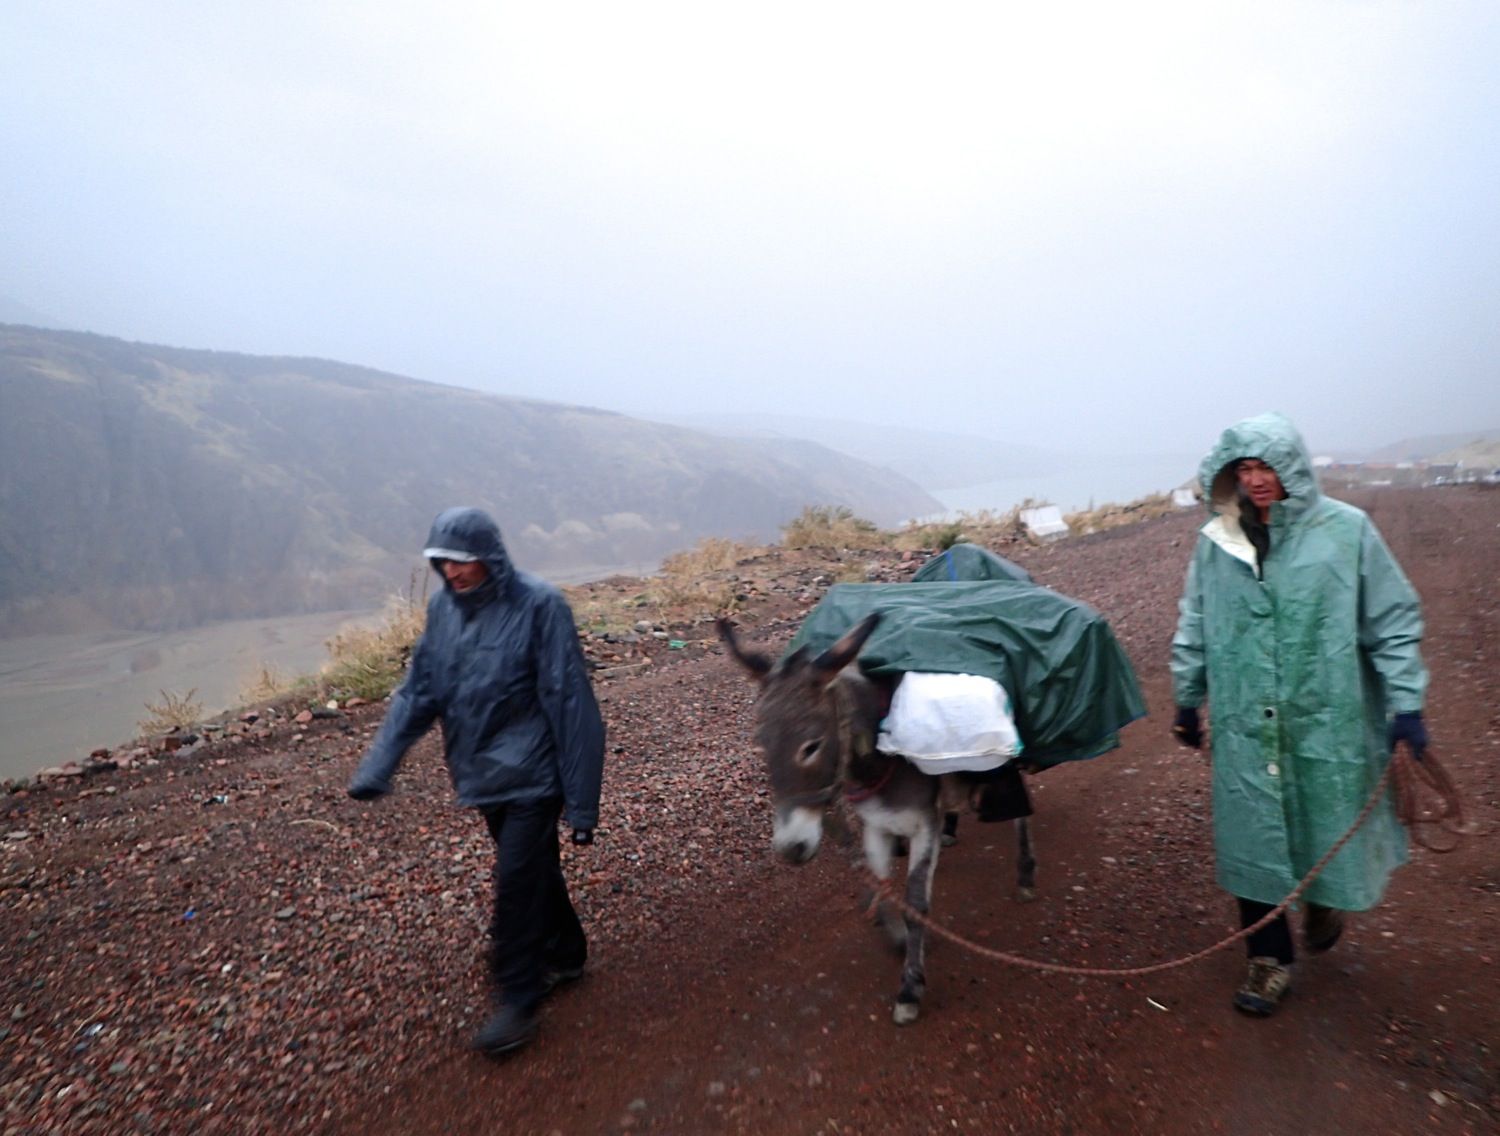 Paul Salopek's guides walk through a wet and cold Uzbek mountain region.